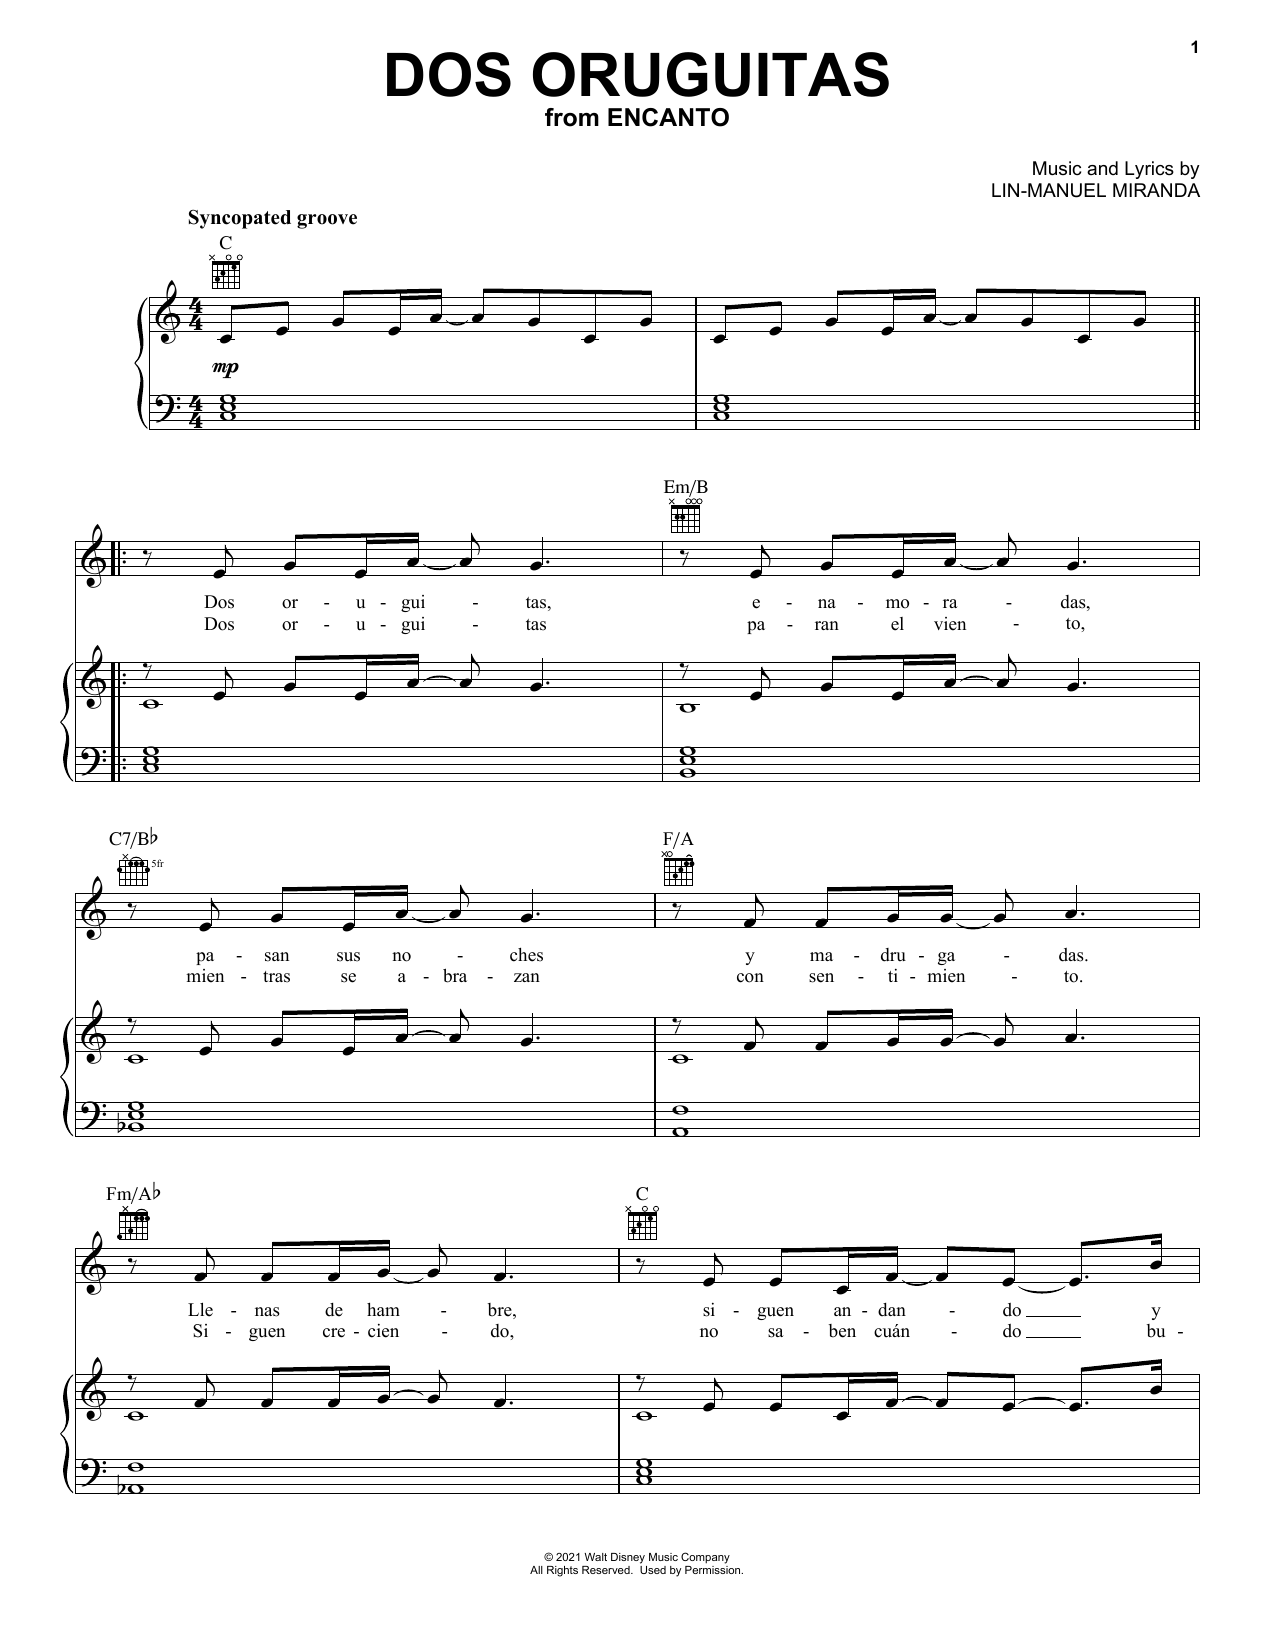 Lin-Manuel Miranda Dos Oruguitas (from Encanto) Sheet Music Notes & Chords for Easy Piano - Download or Print PDF